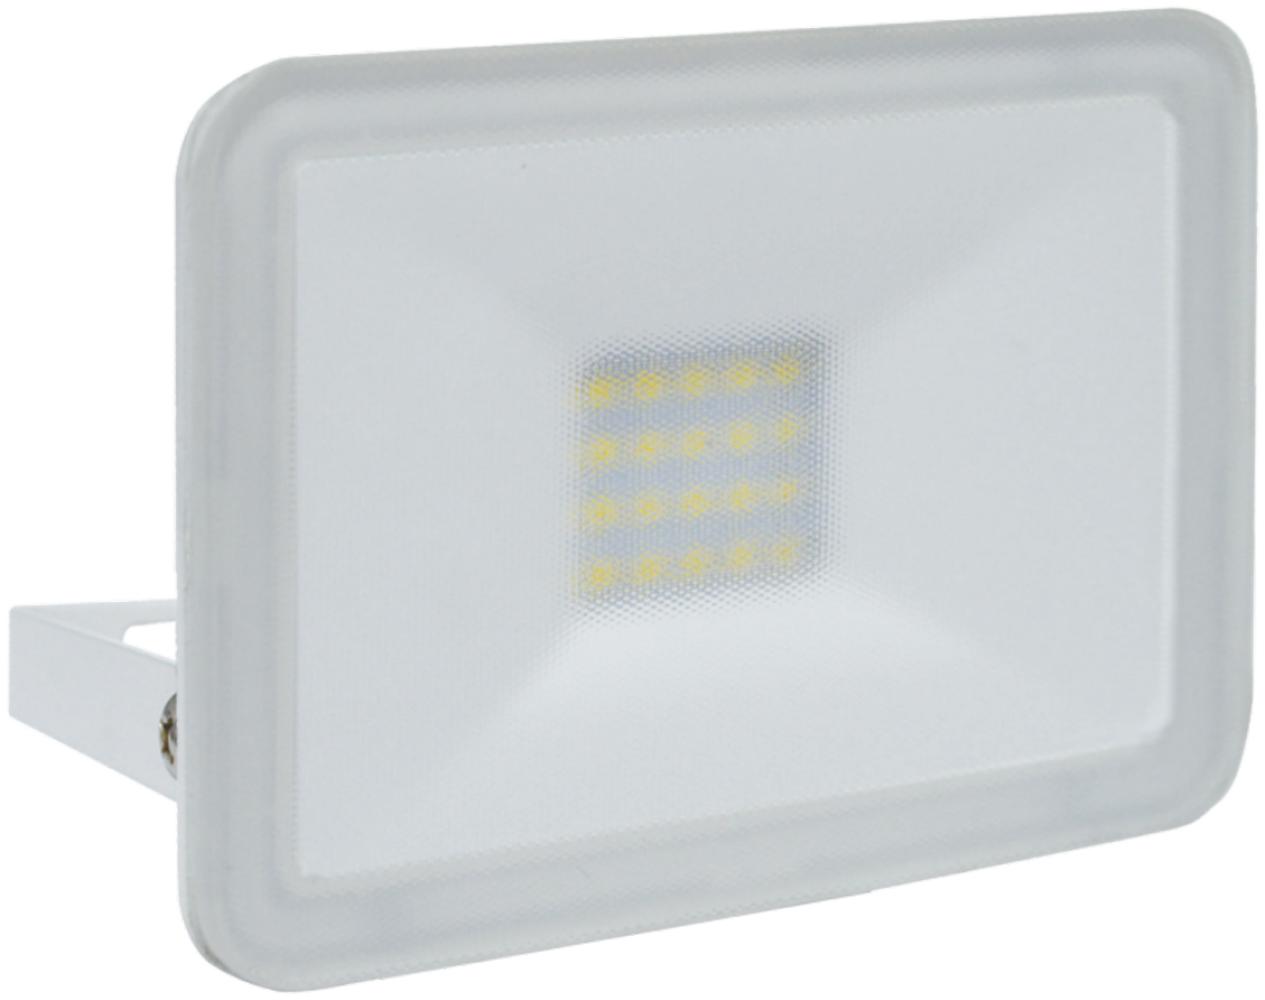 10Watt LED Strahler / Fluter mit Befestigungsbügel, IP65, Fassadenbeleuchtung Bild 1